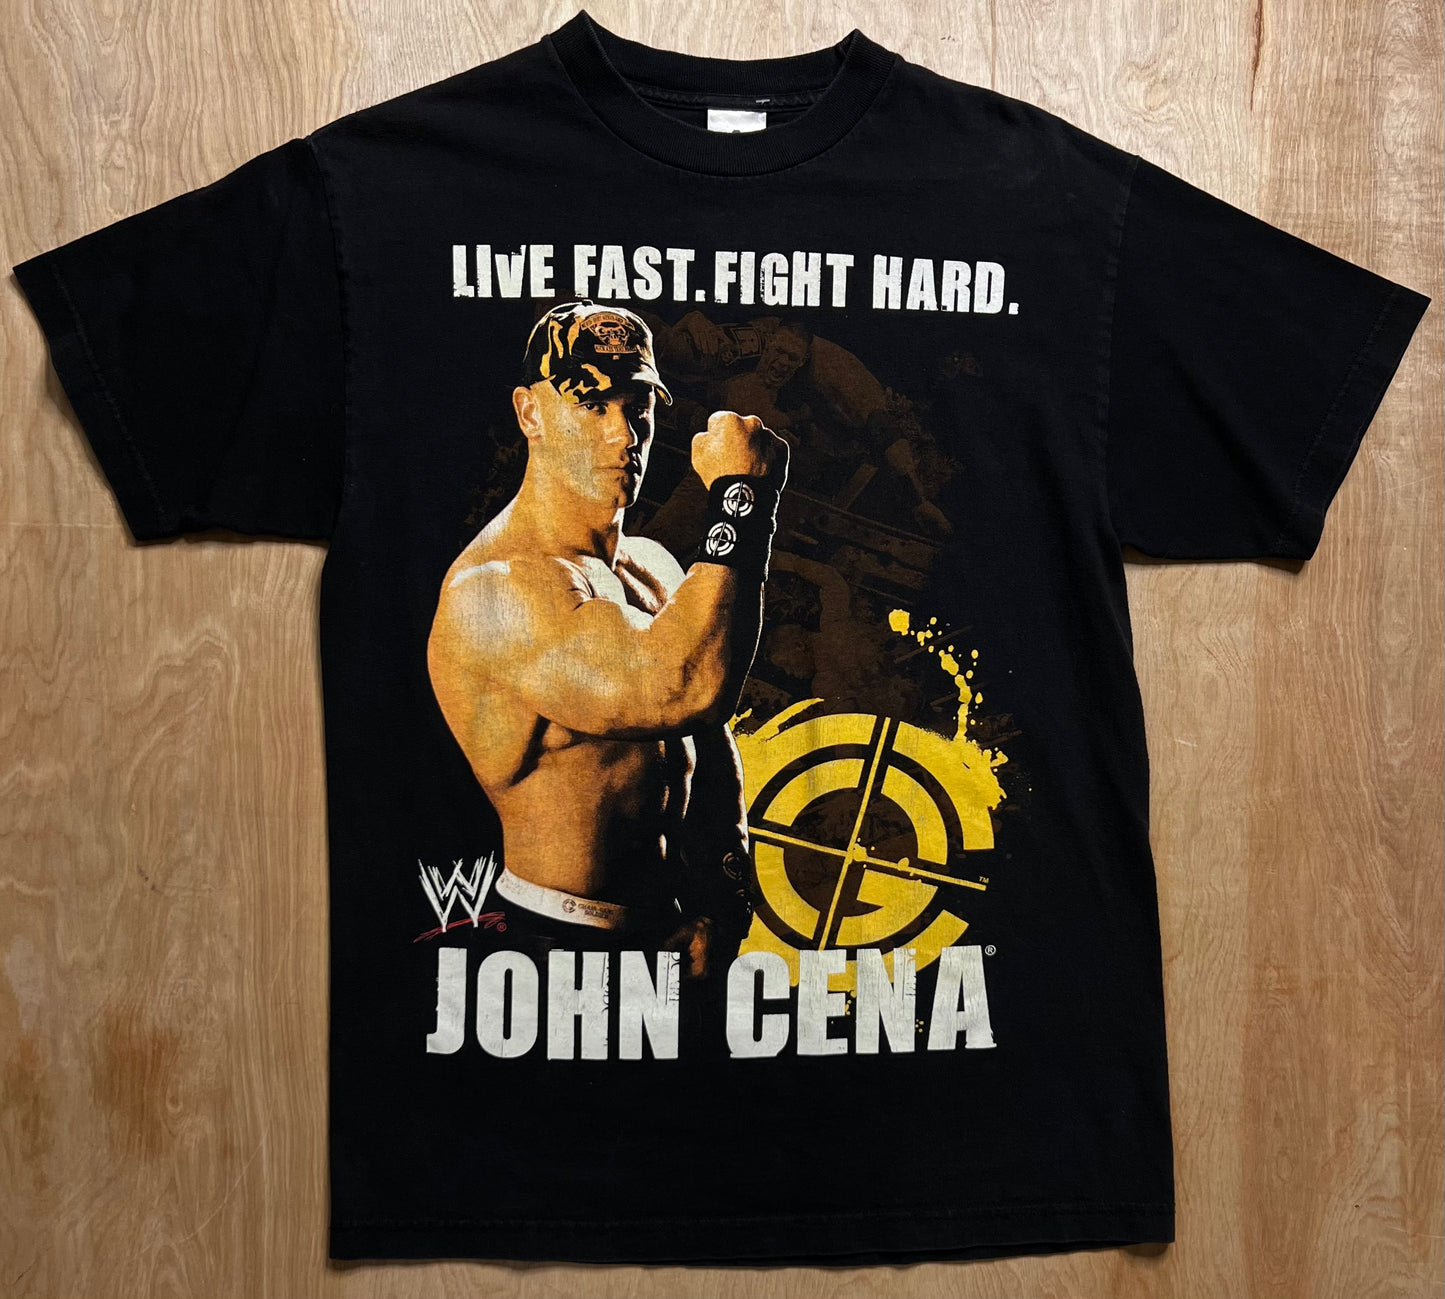 2000's John Cena "Live Fast. Fight Hard." Wresting T-Shirt